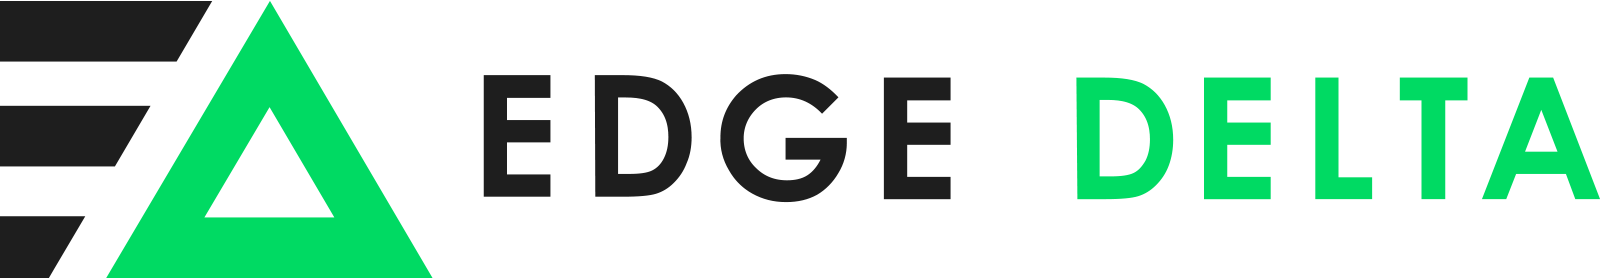 `Edge Delta blue logo`